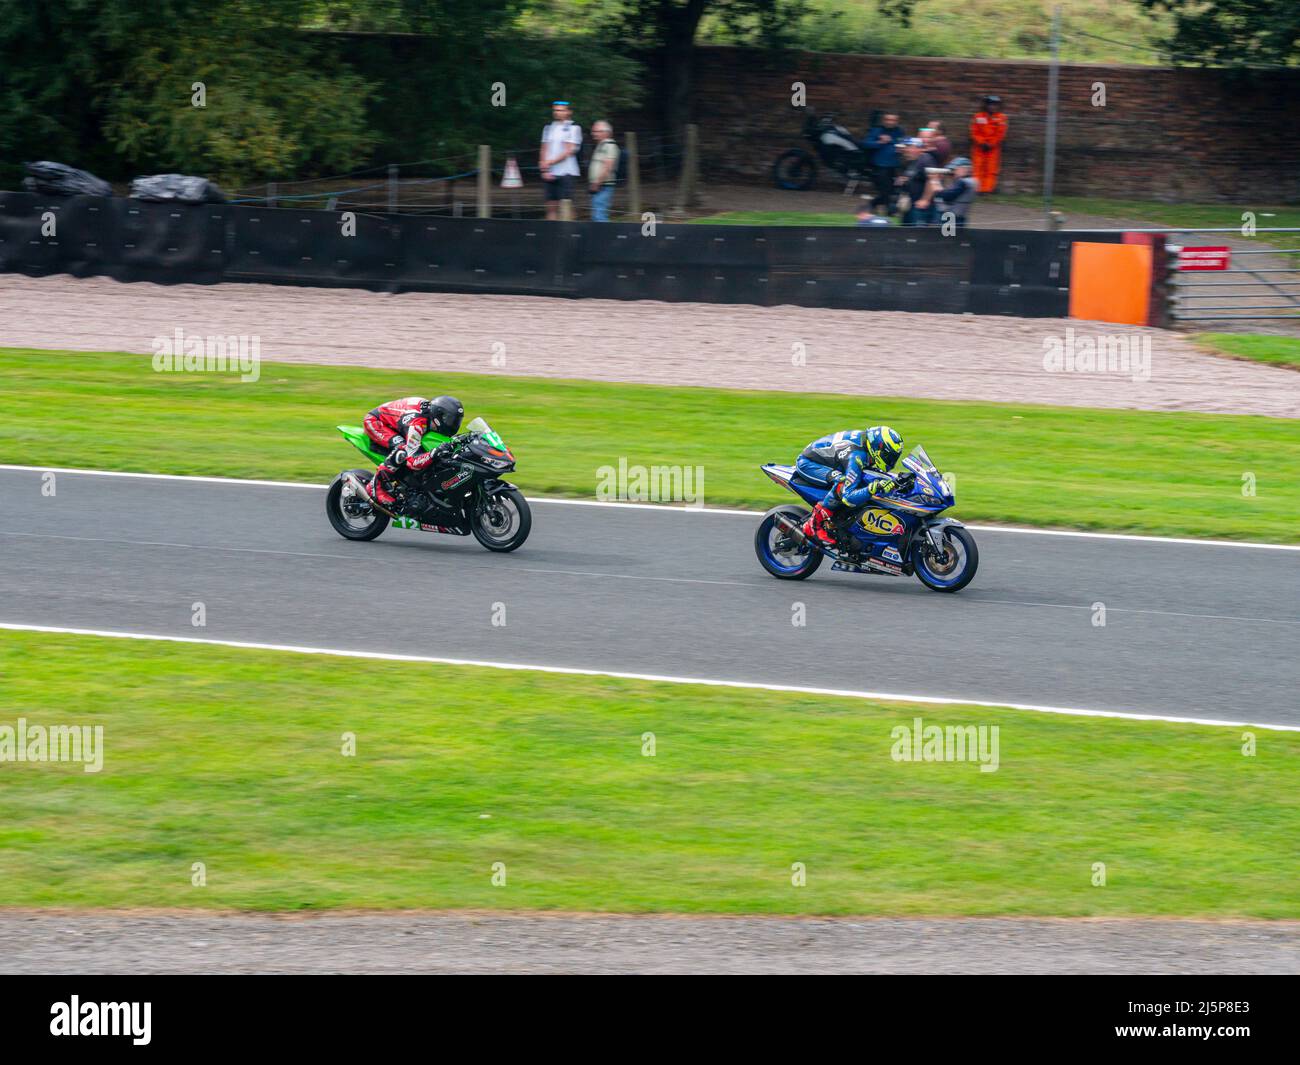 2 motorbikes racing at Oulton Park Circuit, Cheshire, UK Stock Photo